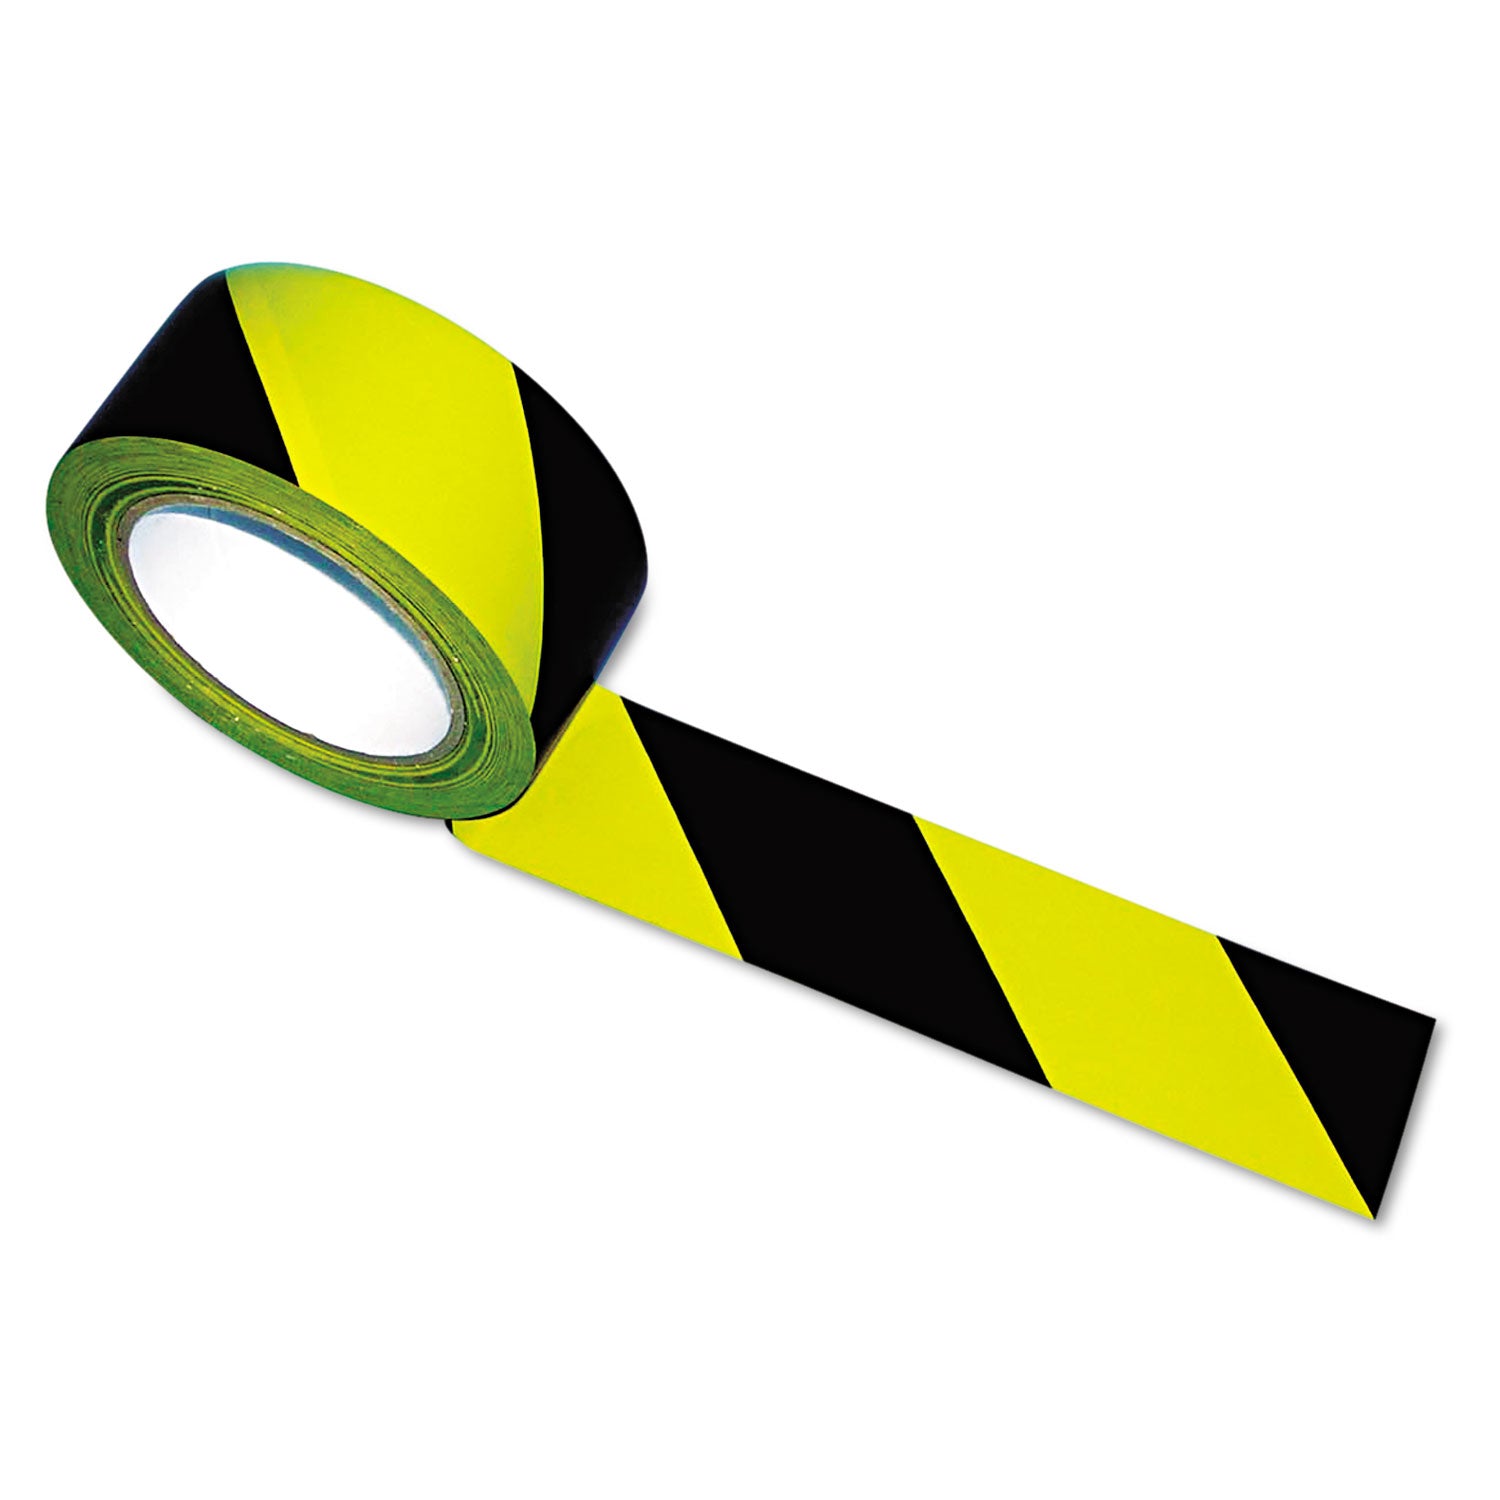 Hazard Marking Aisle Tape, 2" x 108 ft, Black/Yellow - 